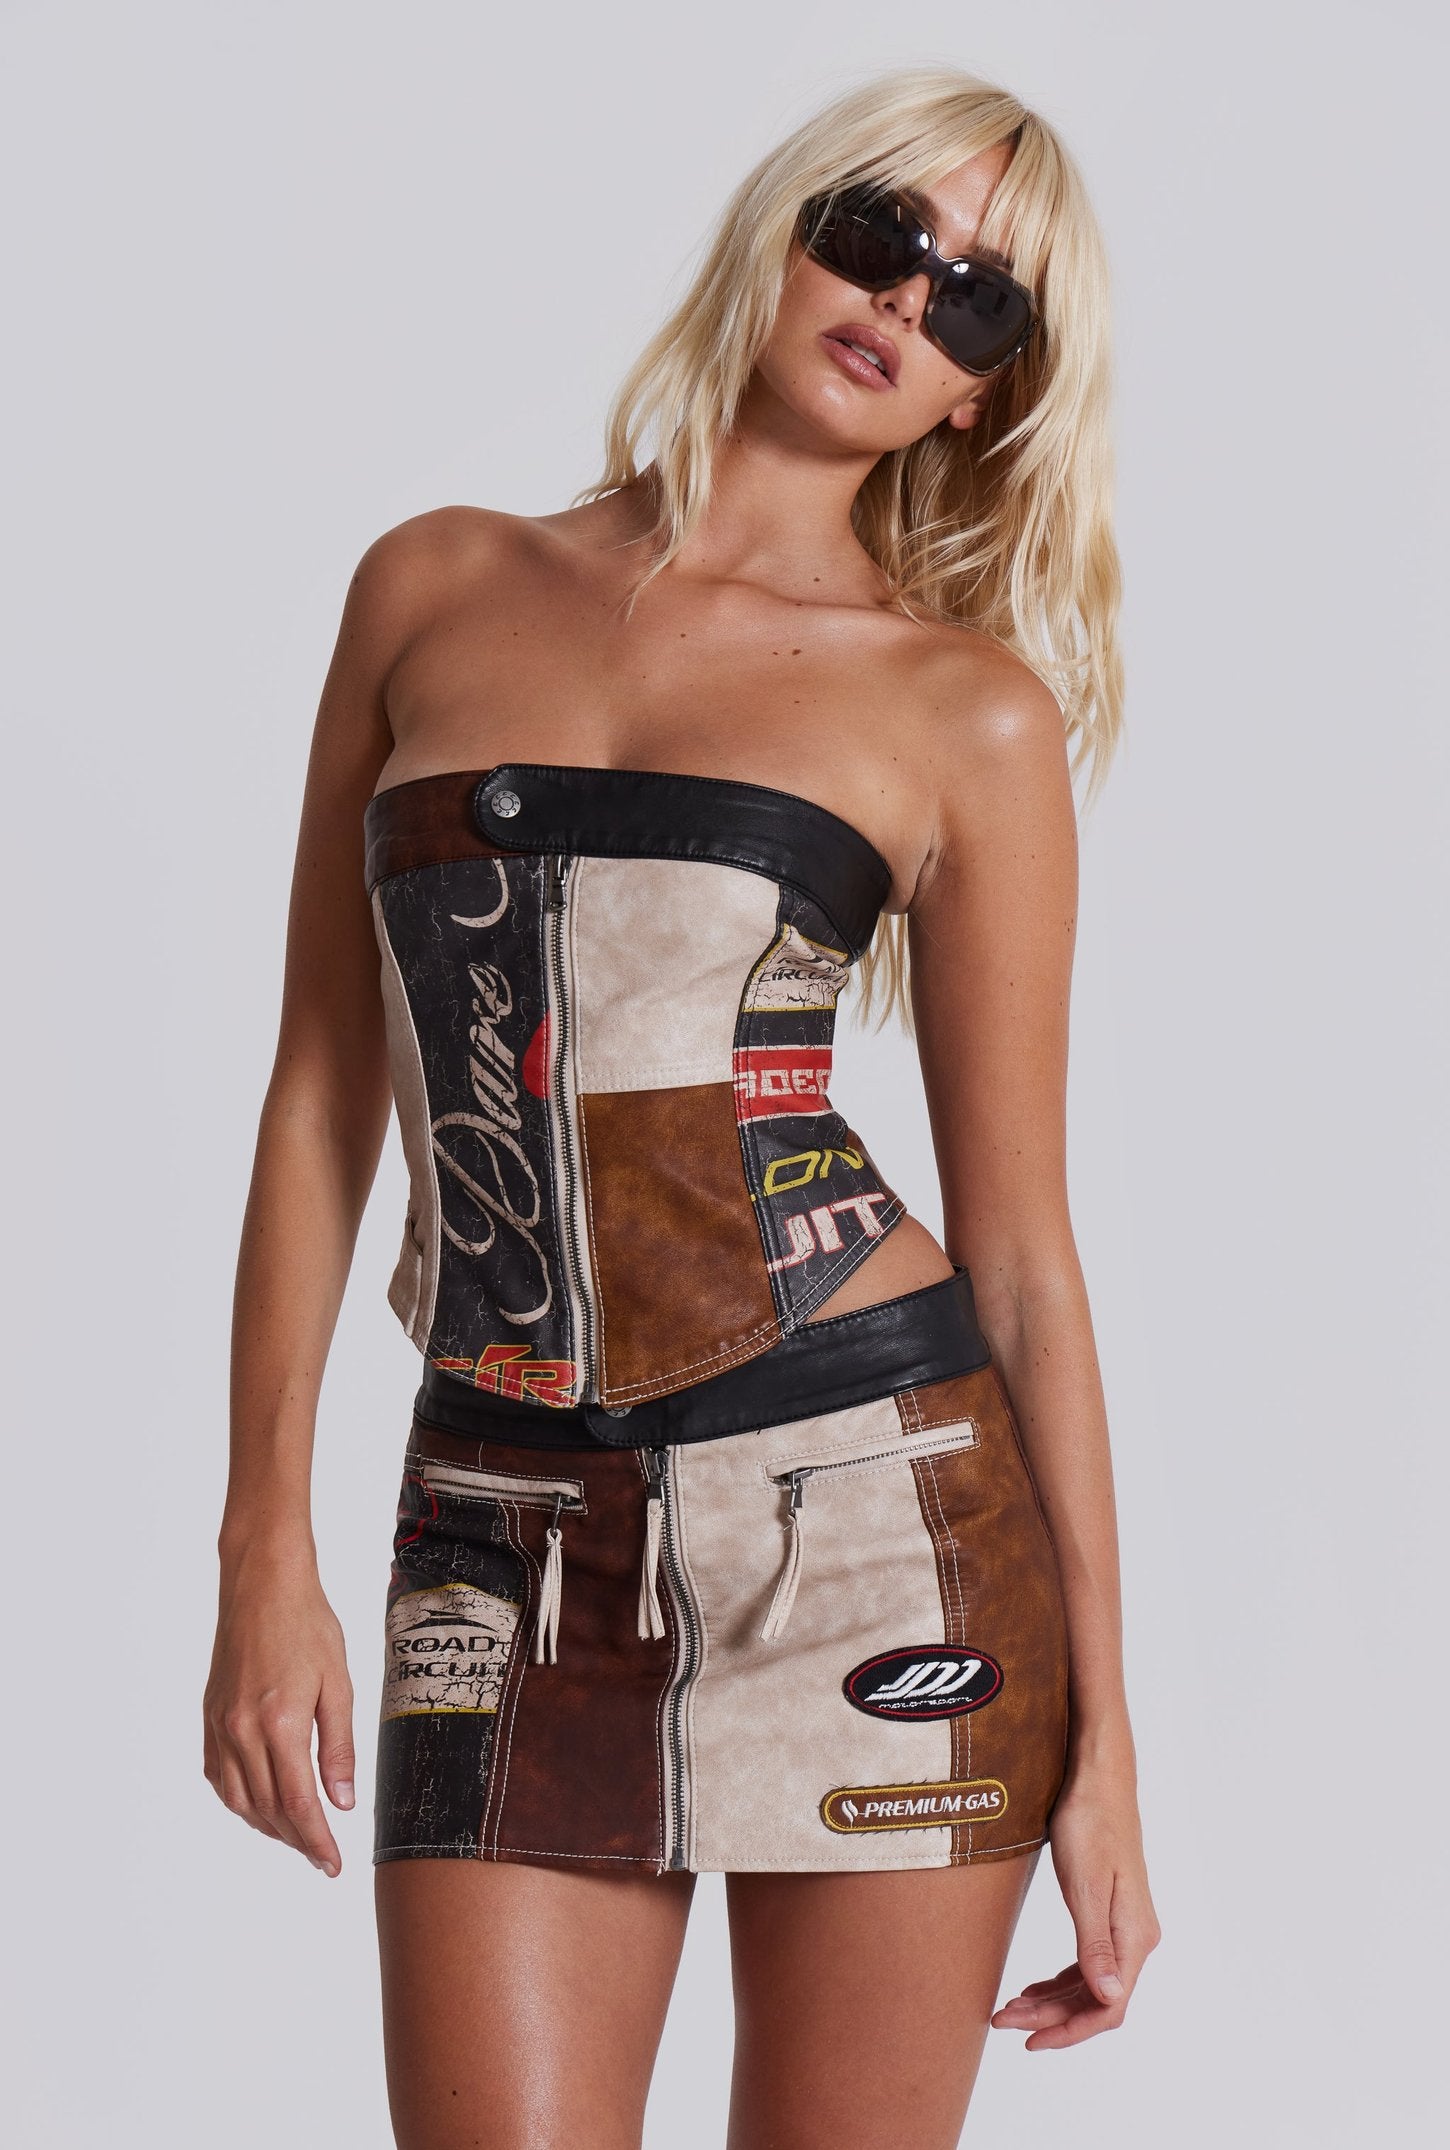 Vegan leather corset